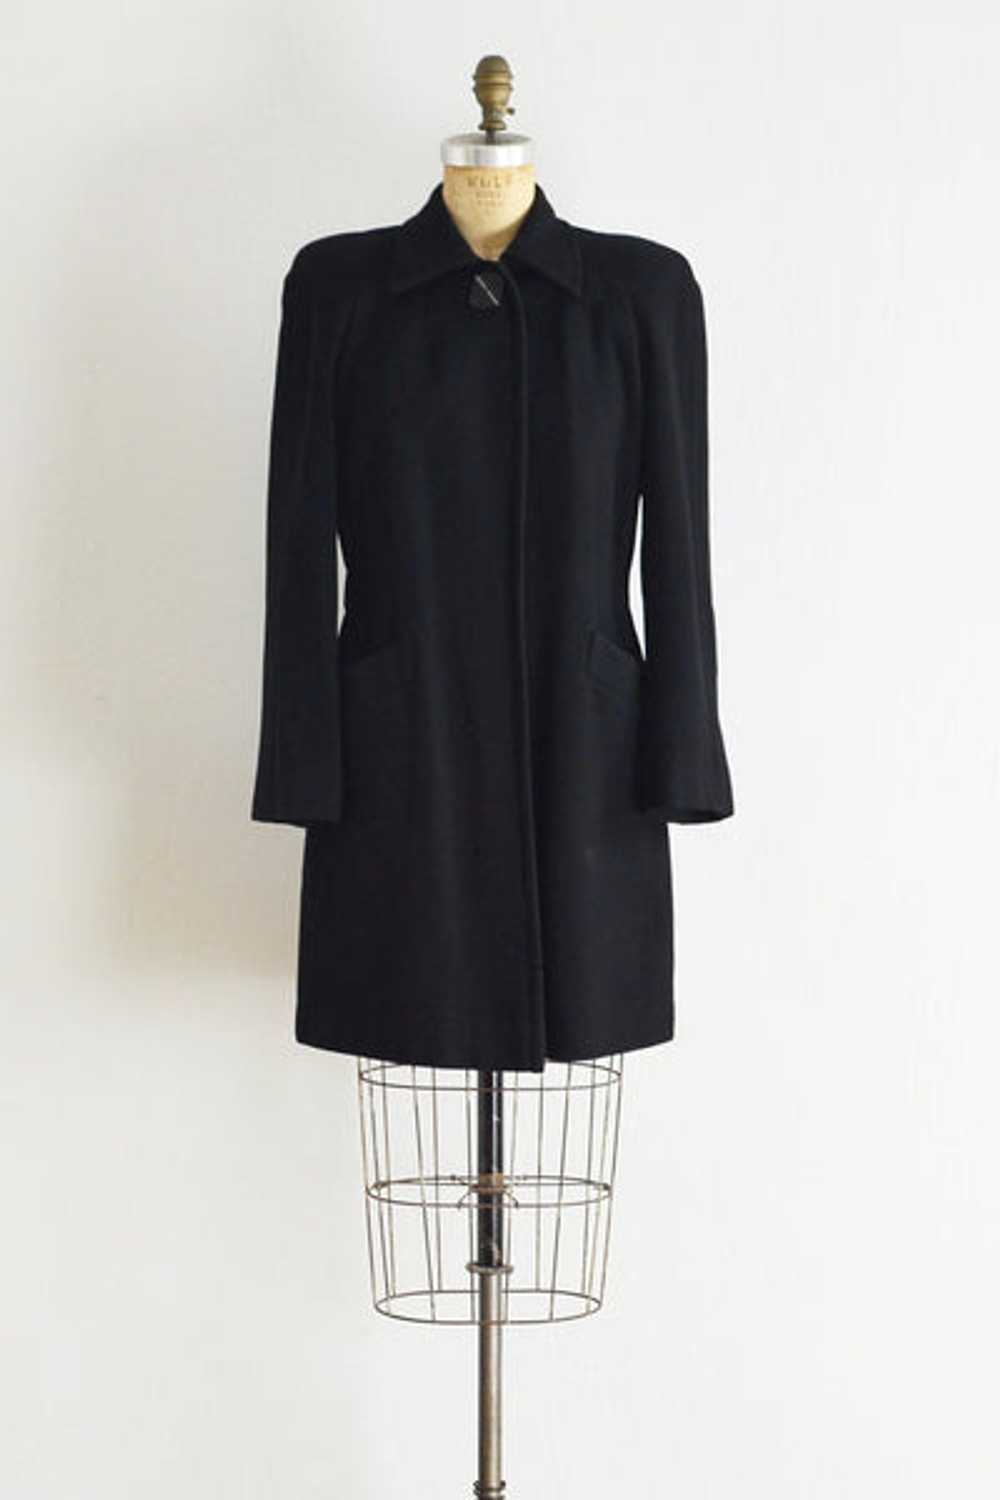 1940s Black Wool Coat - image 3